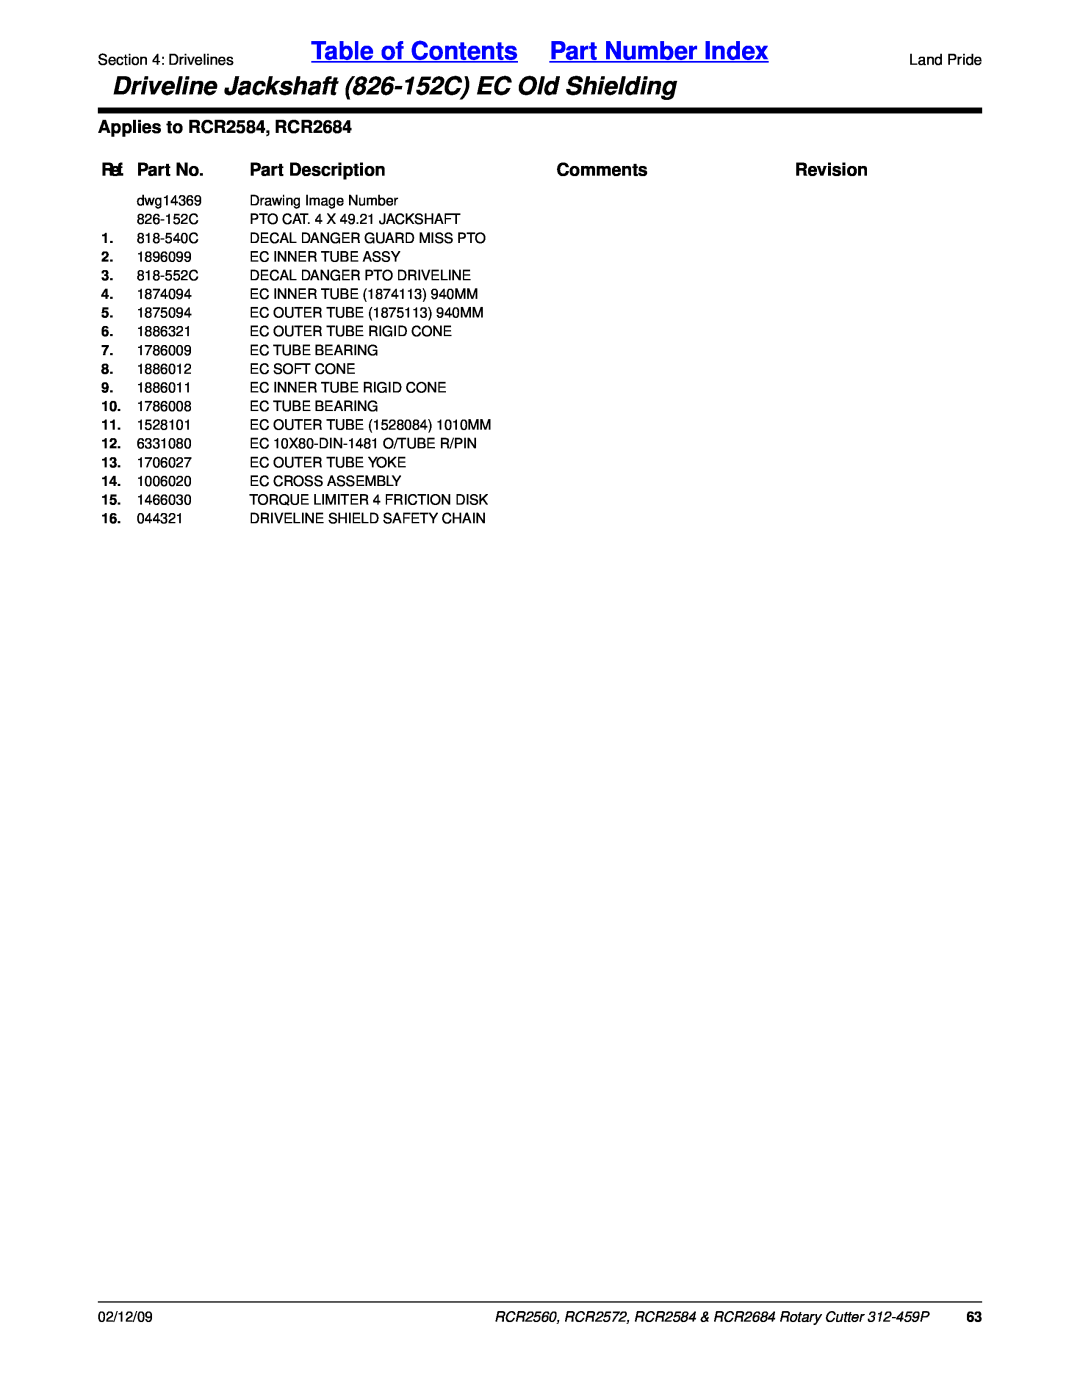 Land Pride RCR2560 manual Table of Contents Part Number Index, Driveline Jackshaft 826-152CEC Old Shielding, Ref. Part No 